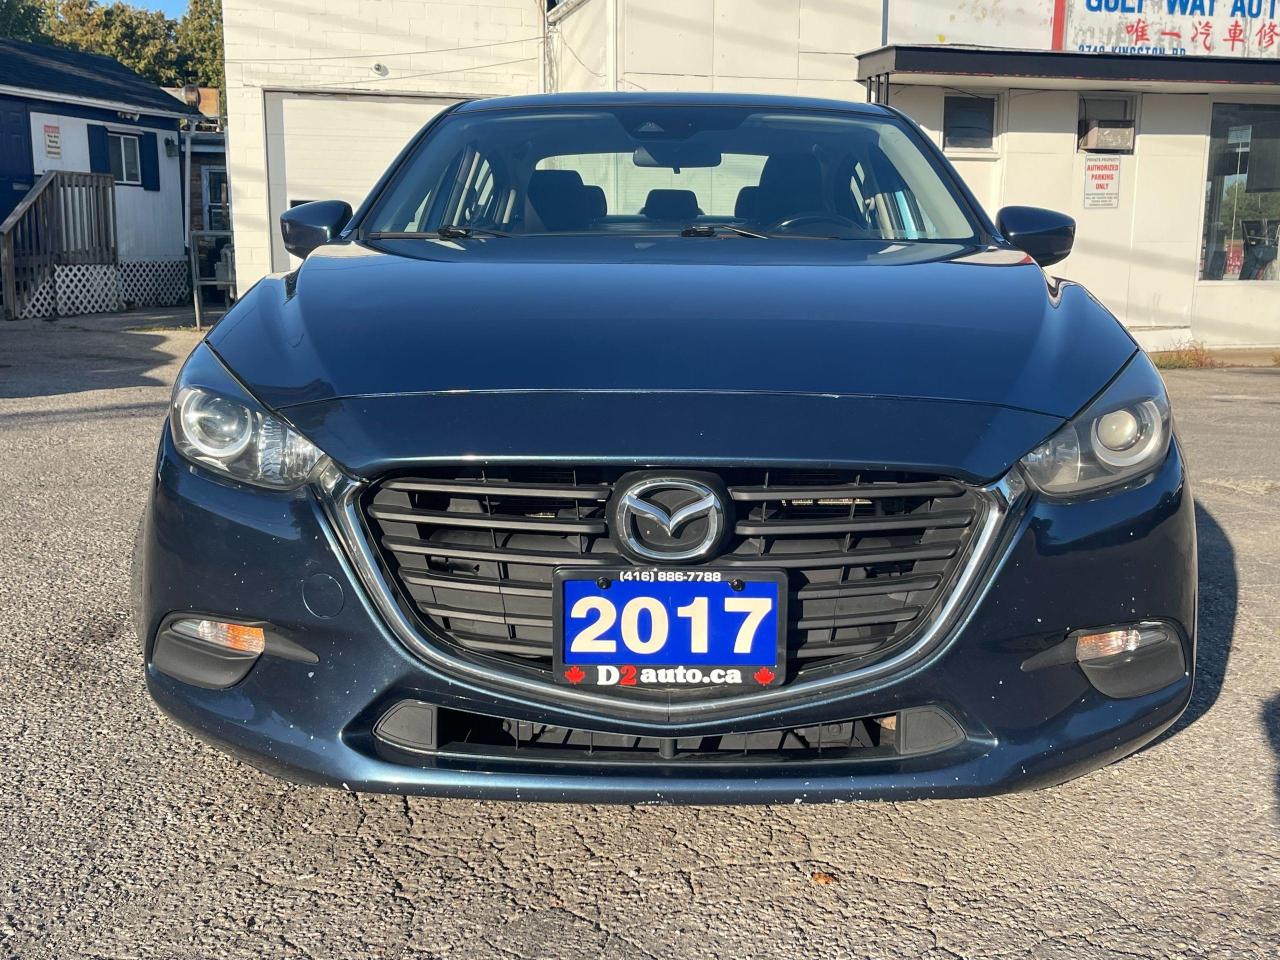 2017 Mazda MAZDA3 TOURING/BT/Backup camera/certified pre owned. - Photo #8